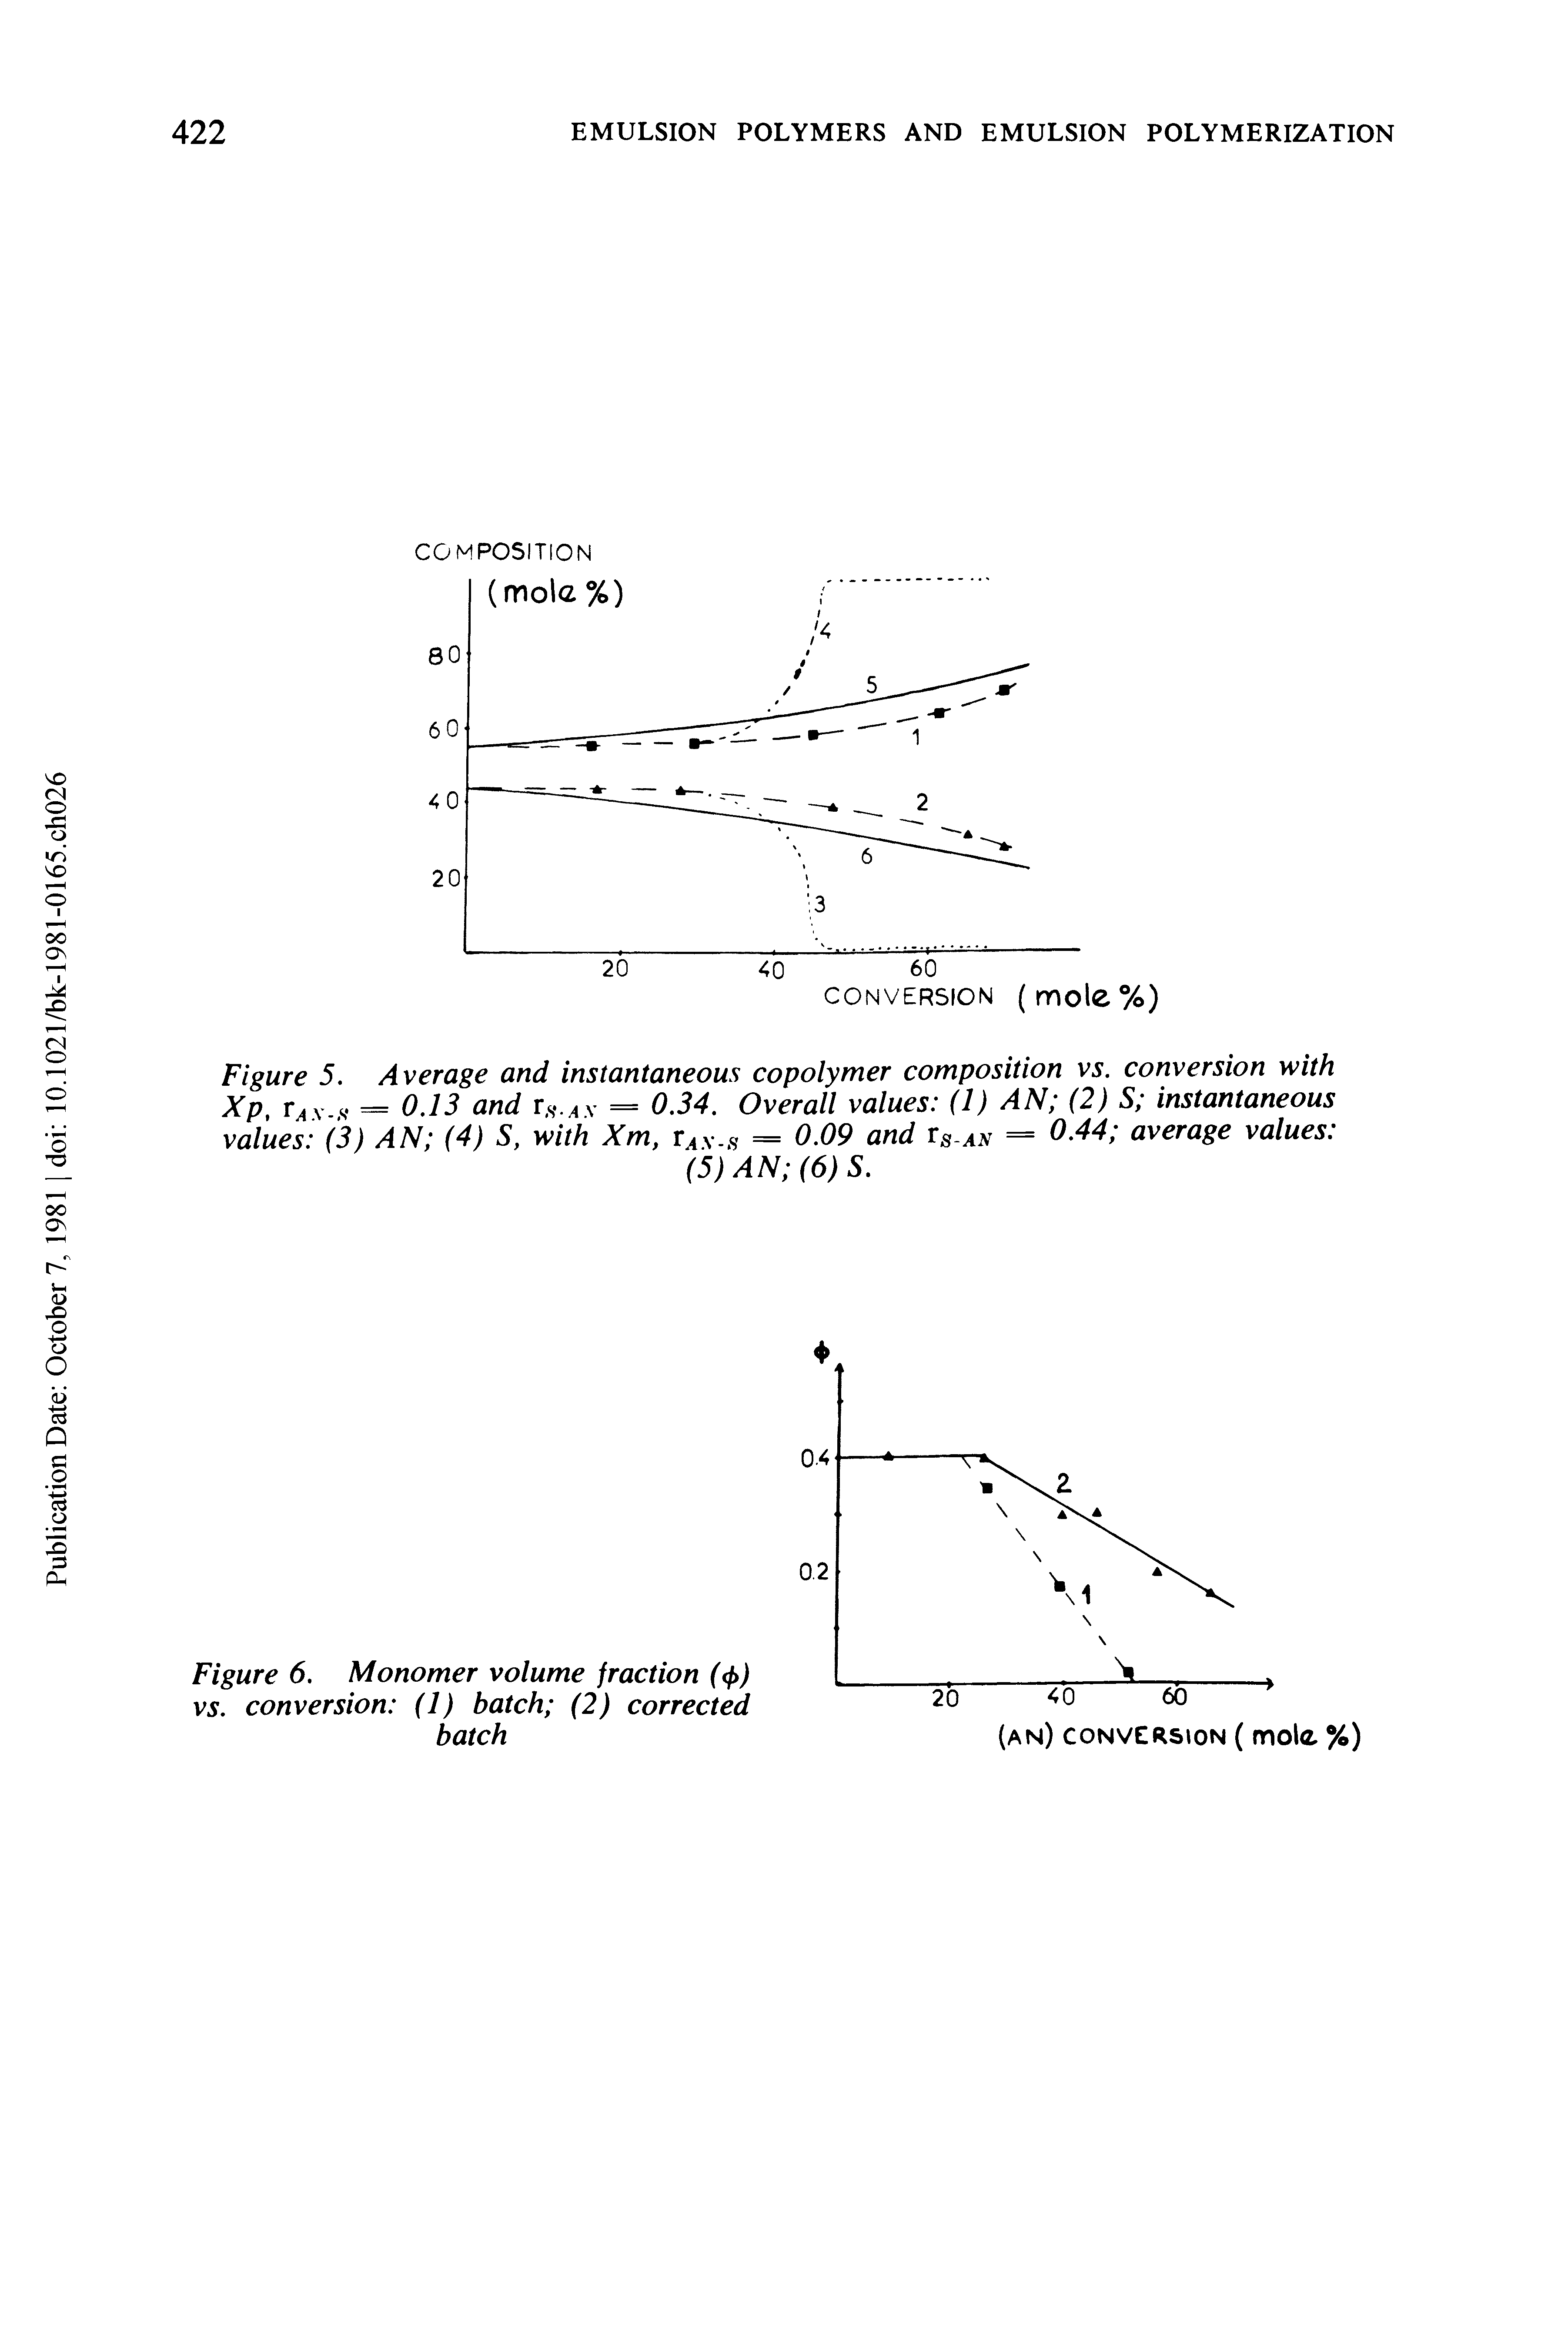 Figure 6. Monomer volume fraction (<f>) vs. conversion (1) batch (2) corrected batch...